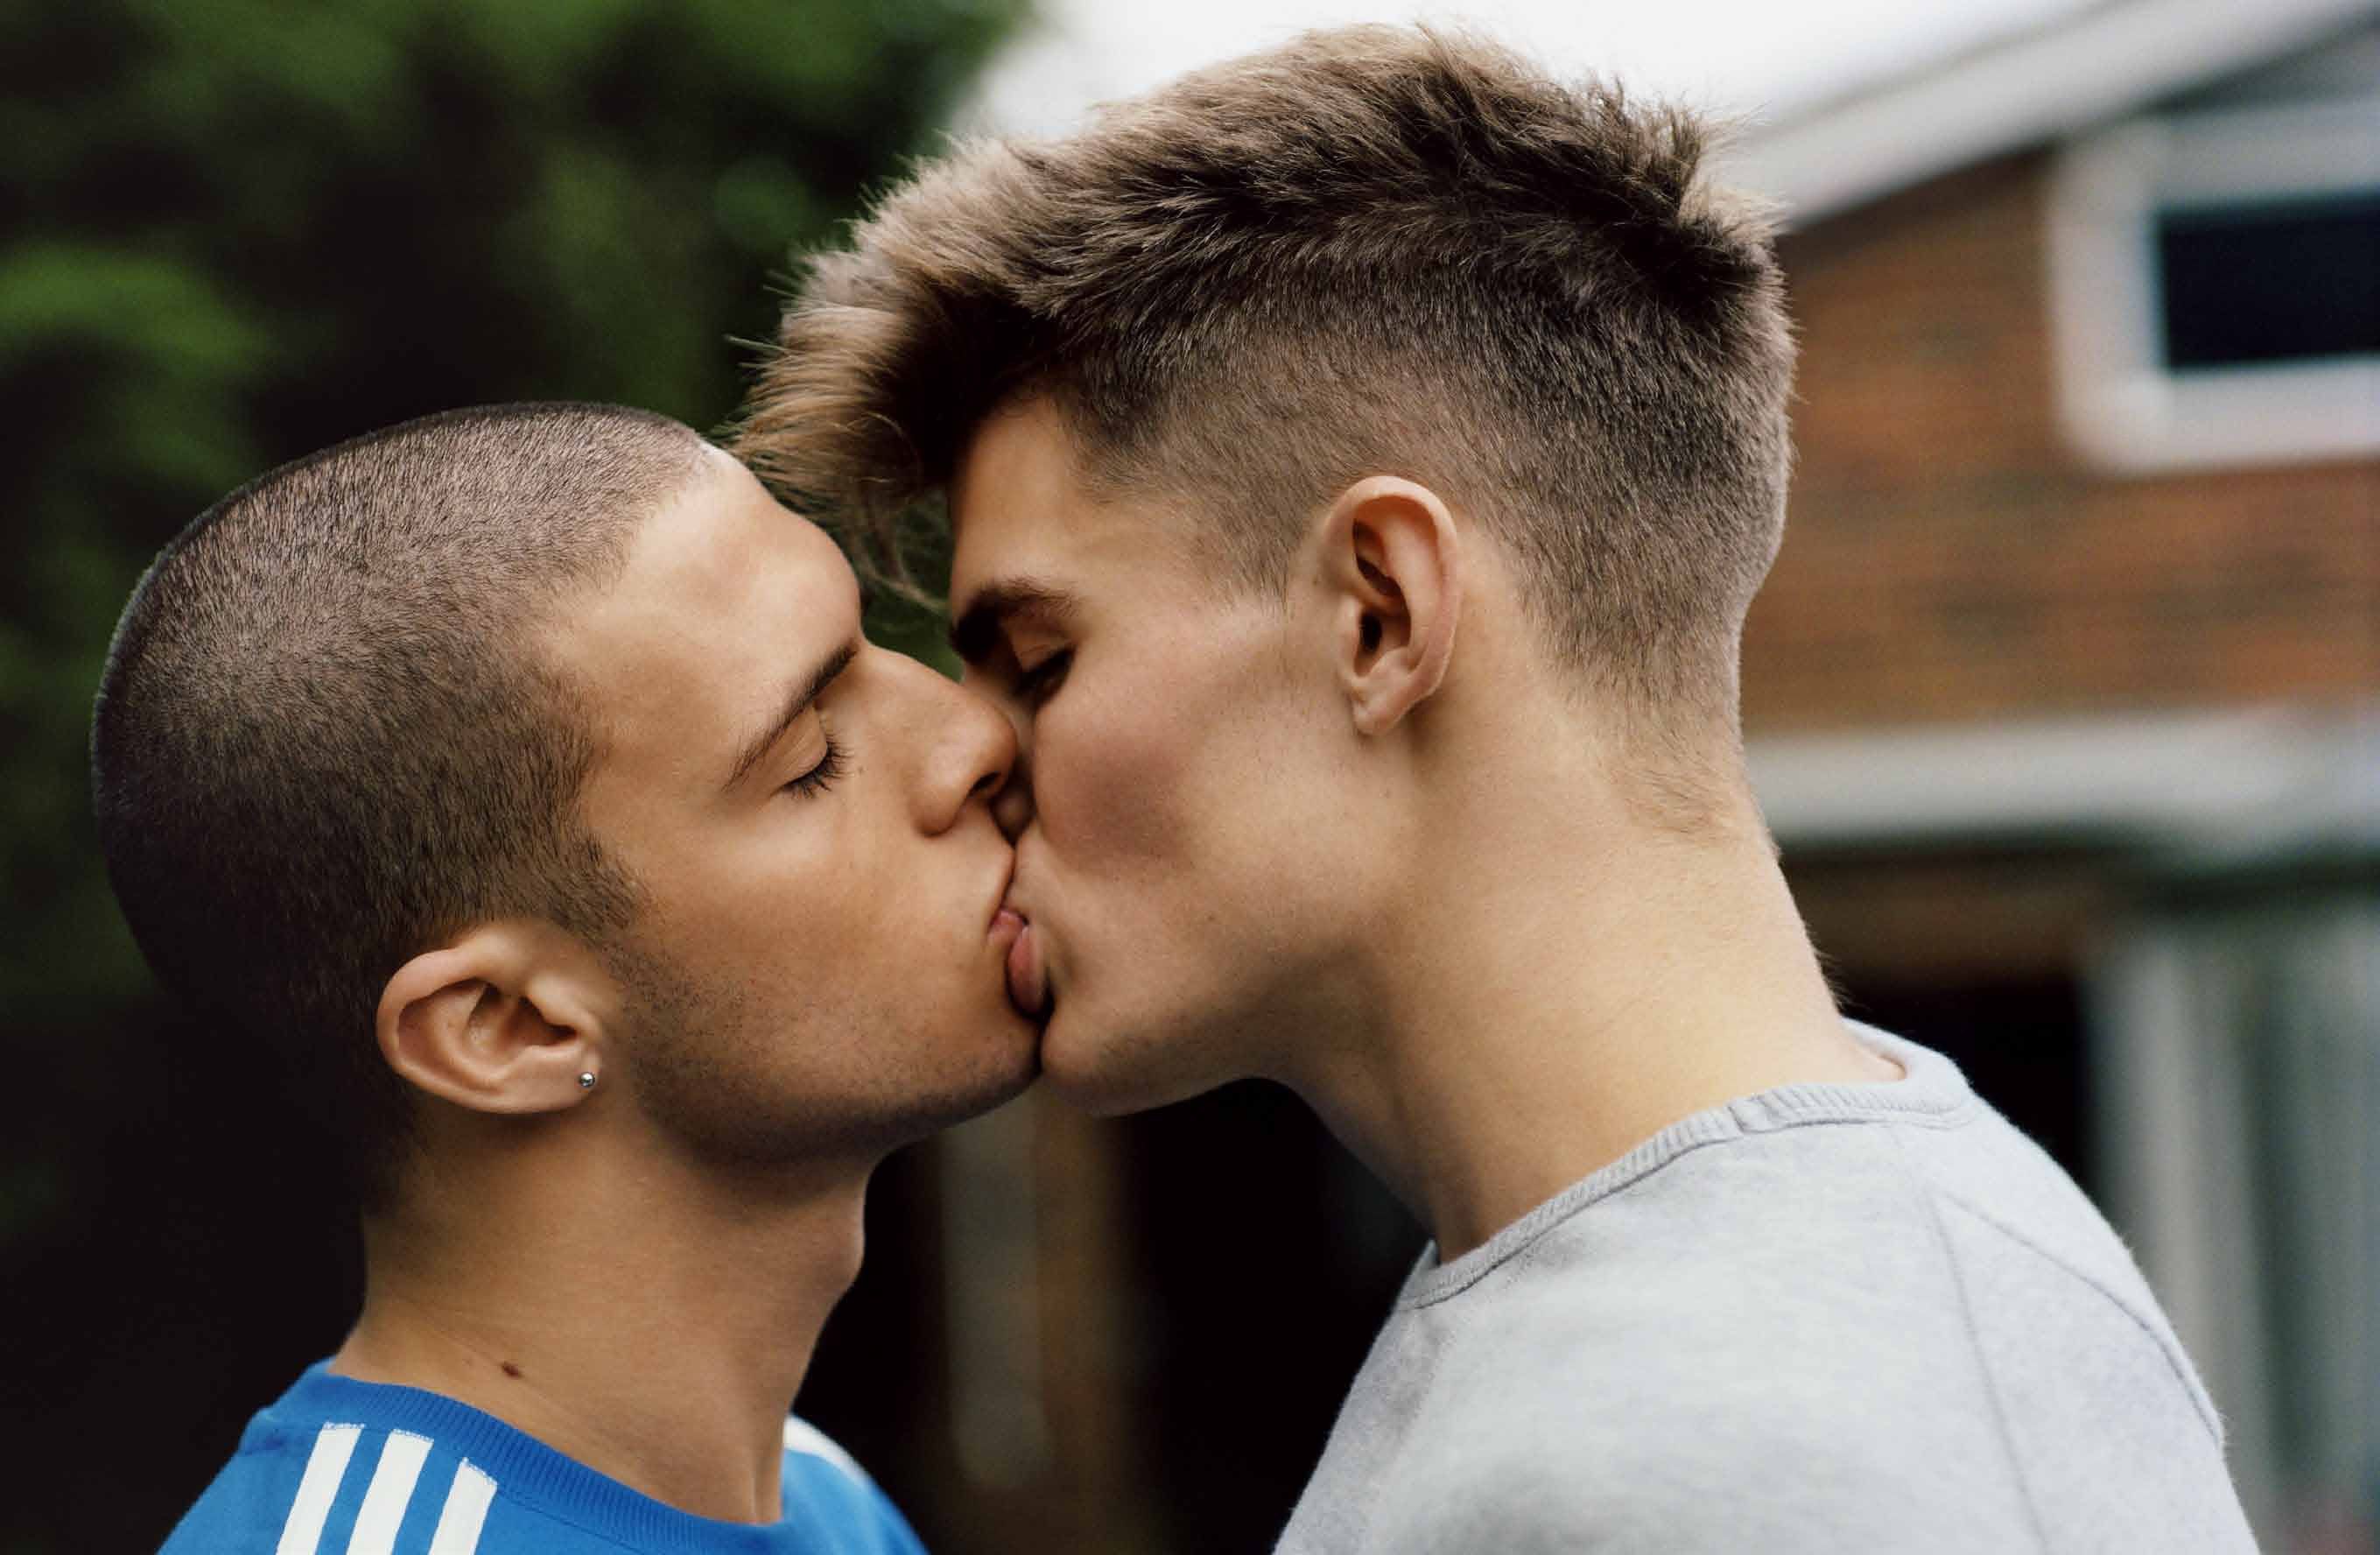 видео где геи целуются фото 12